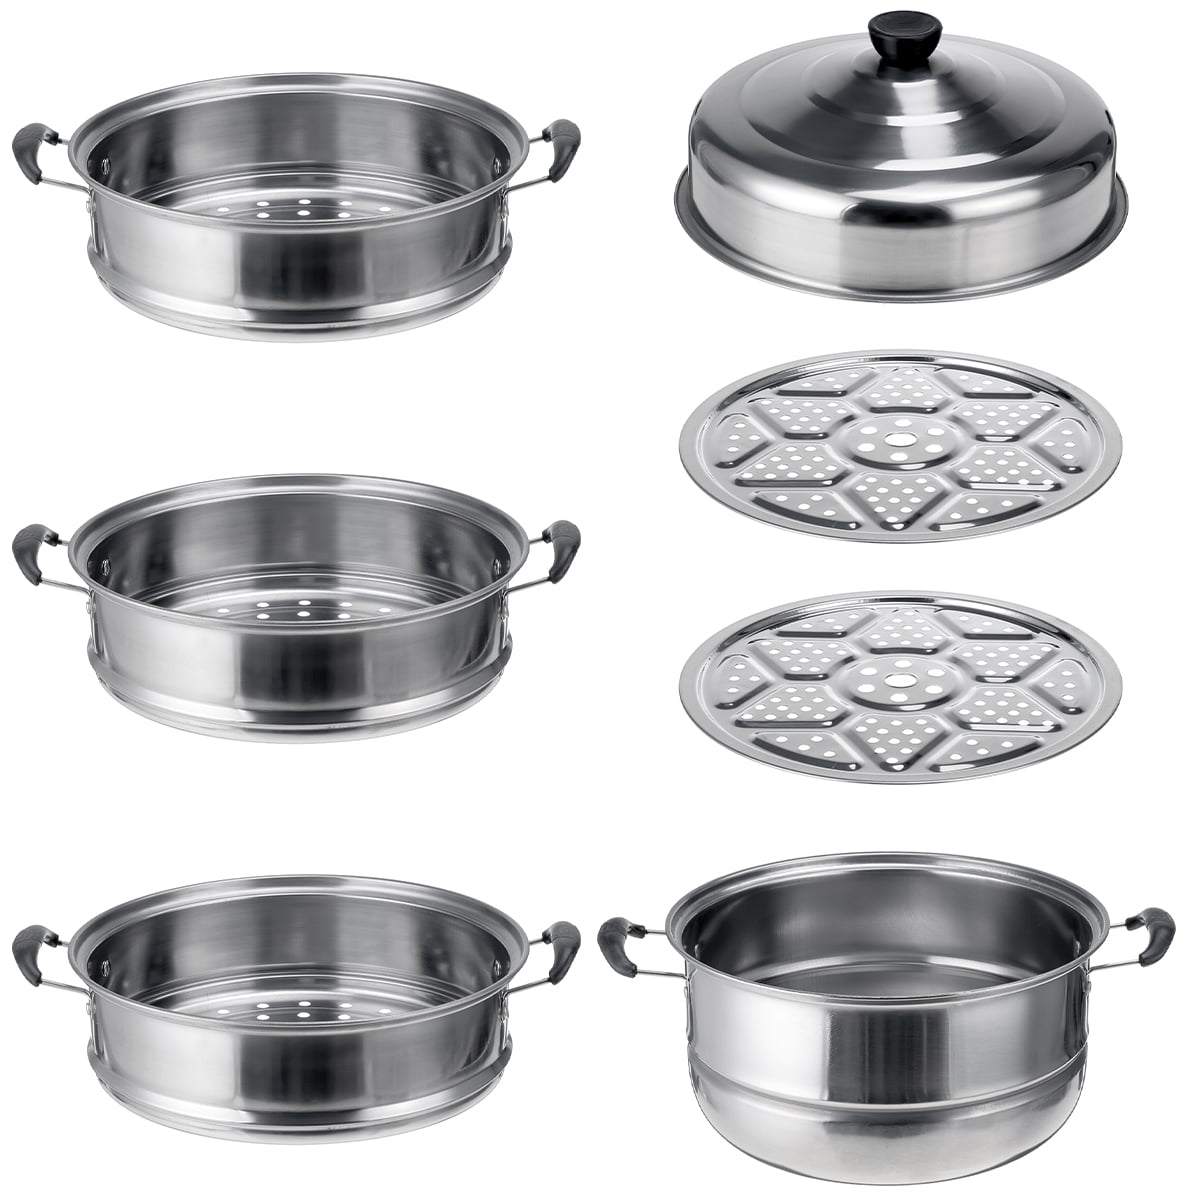 Details about   5-Tiers Kitchen Steamer Hot Pot Stainless Steel Steam Cookware Saucepan Cooker 